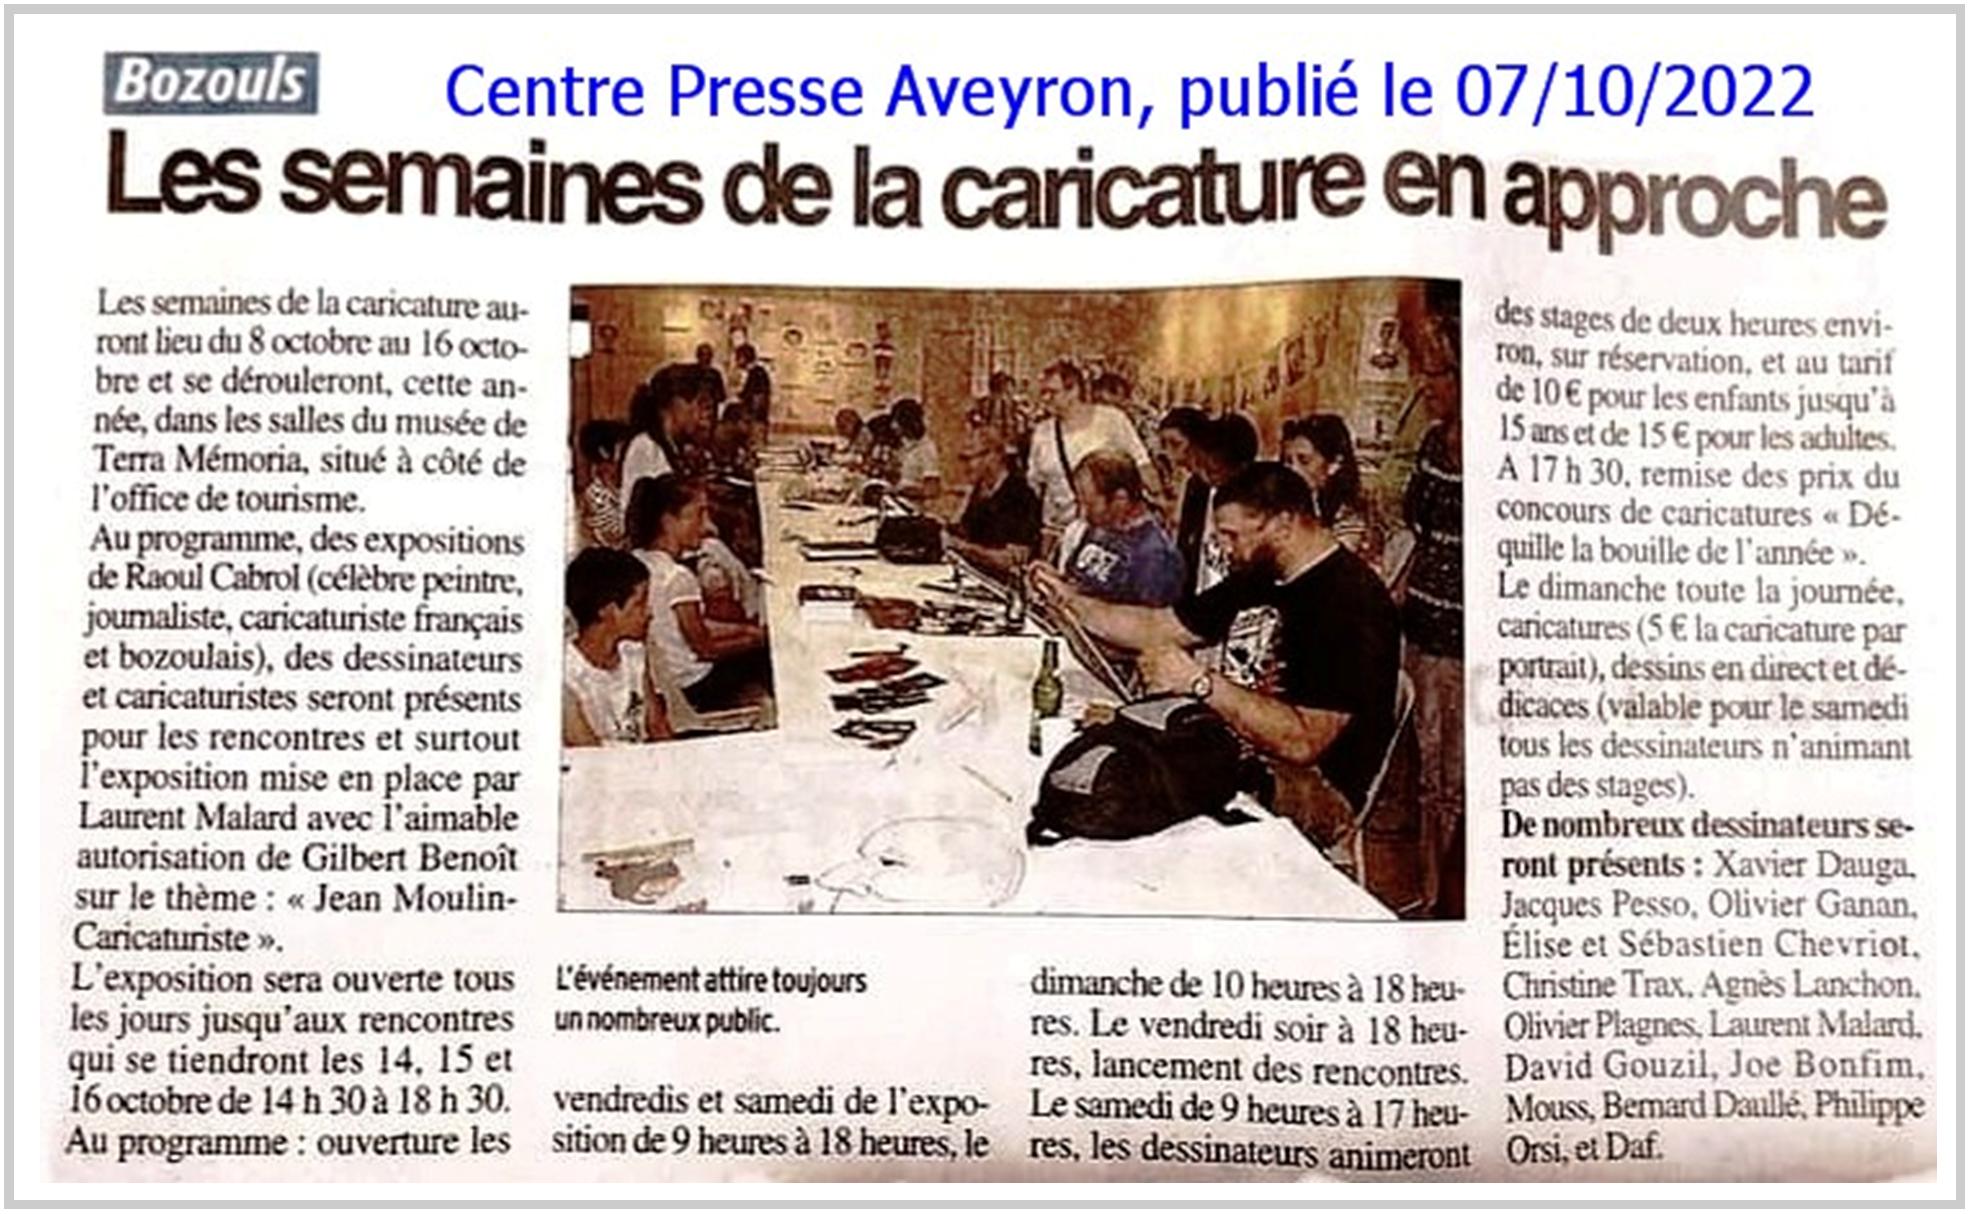 Centre Presse Aveyronnais
octobre 2022